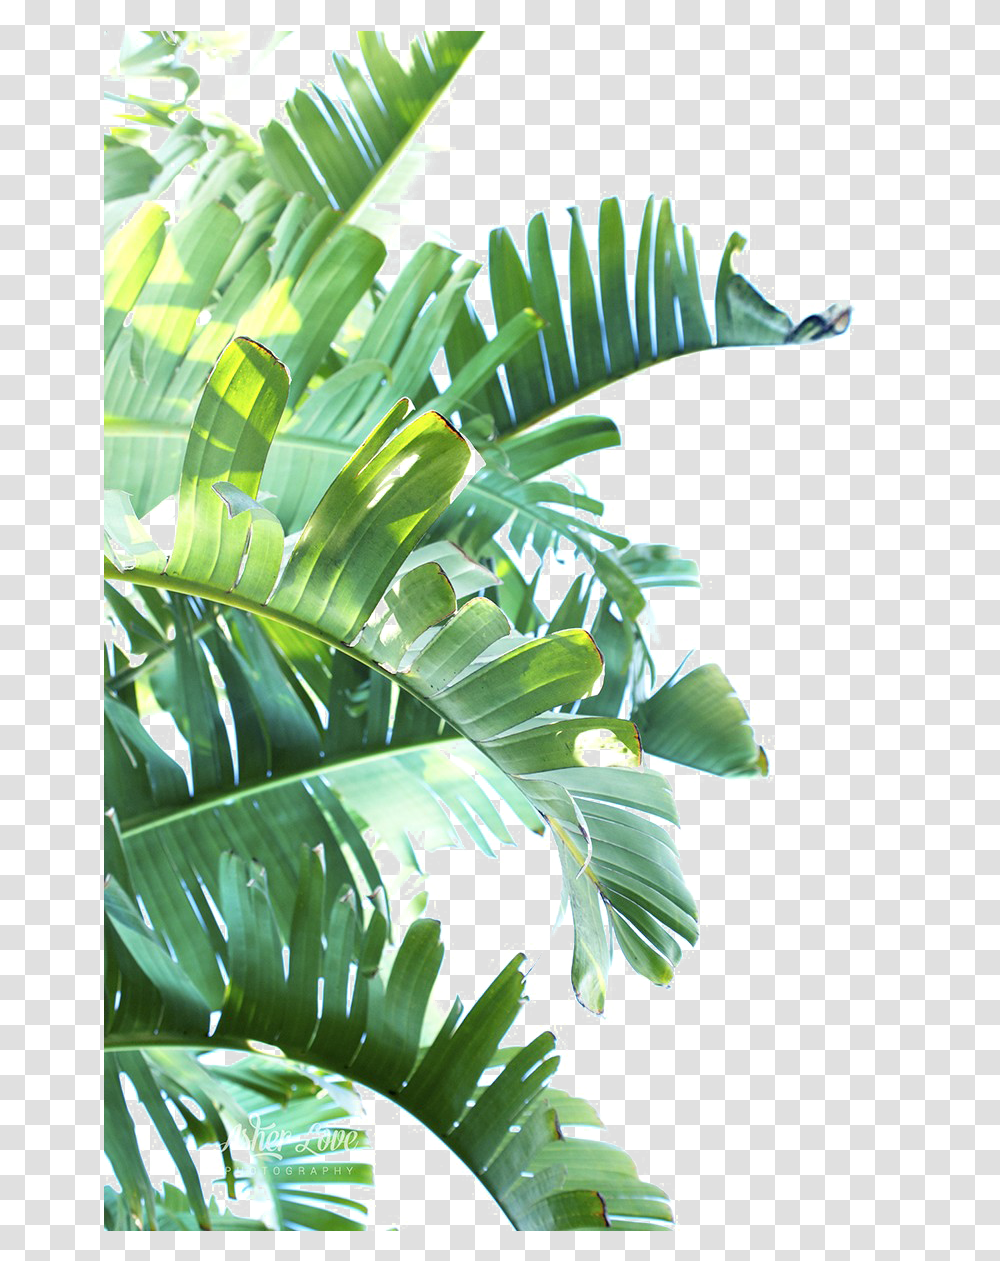 Green Leaf Clipart Tropical Leaves, Vegetation, Plant, Rainforest, Land ...